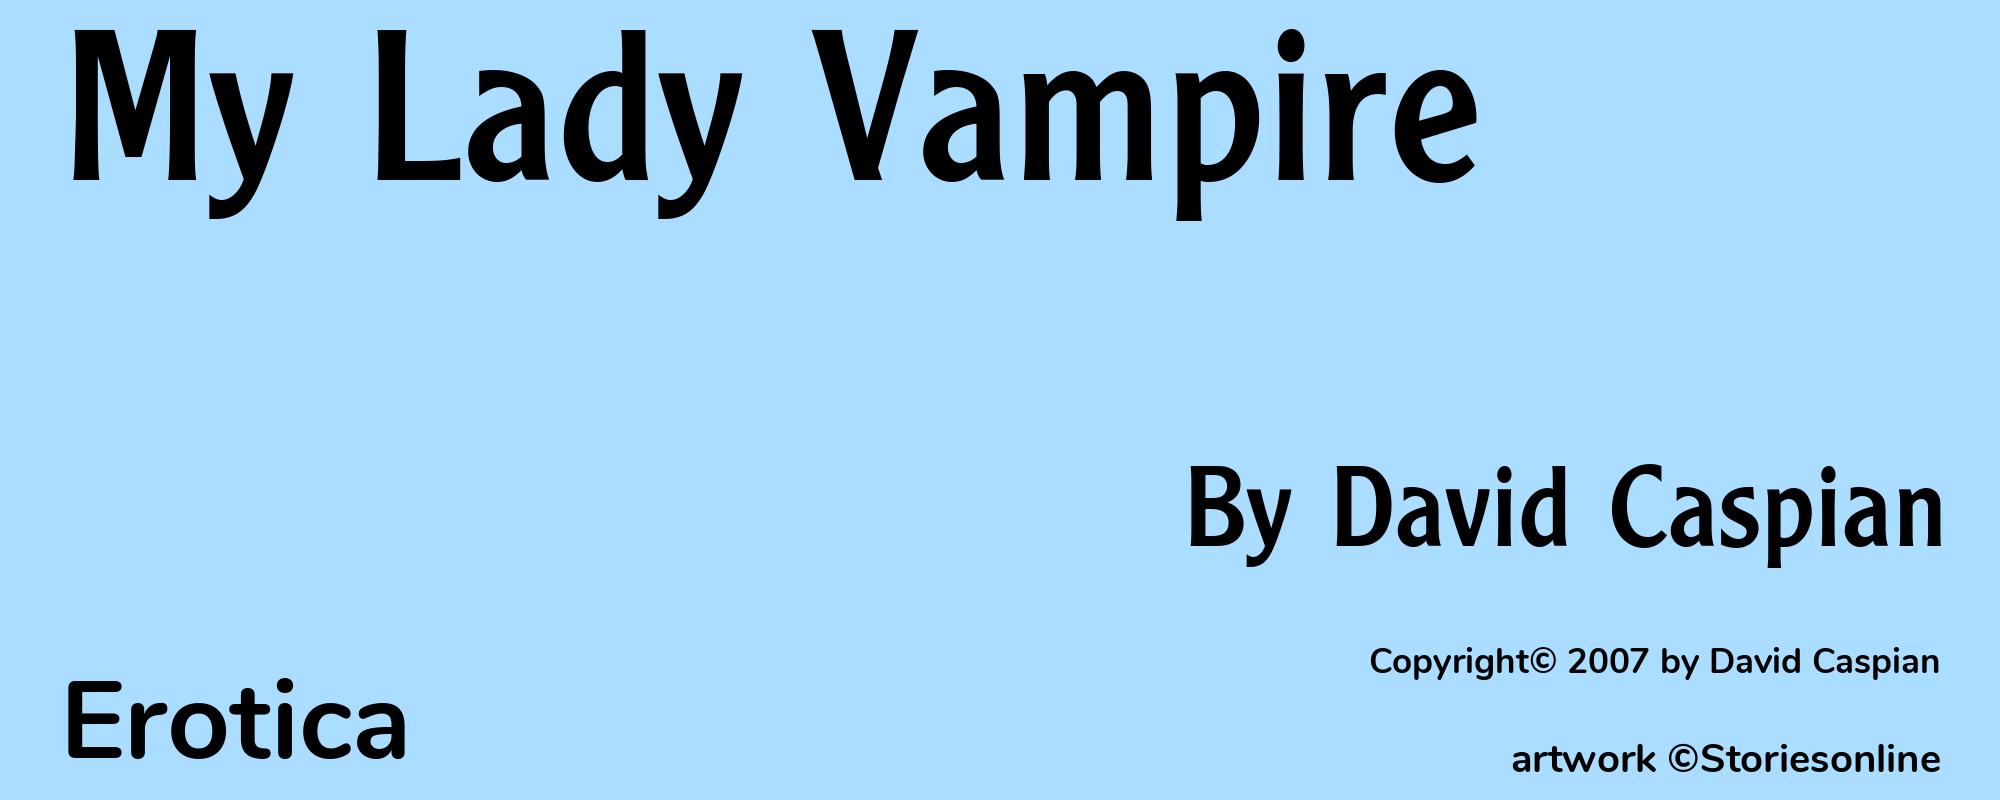 My Lady Vampire - Cover